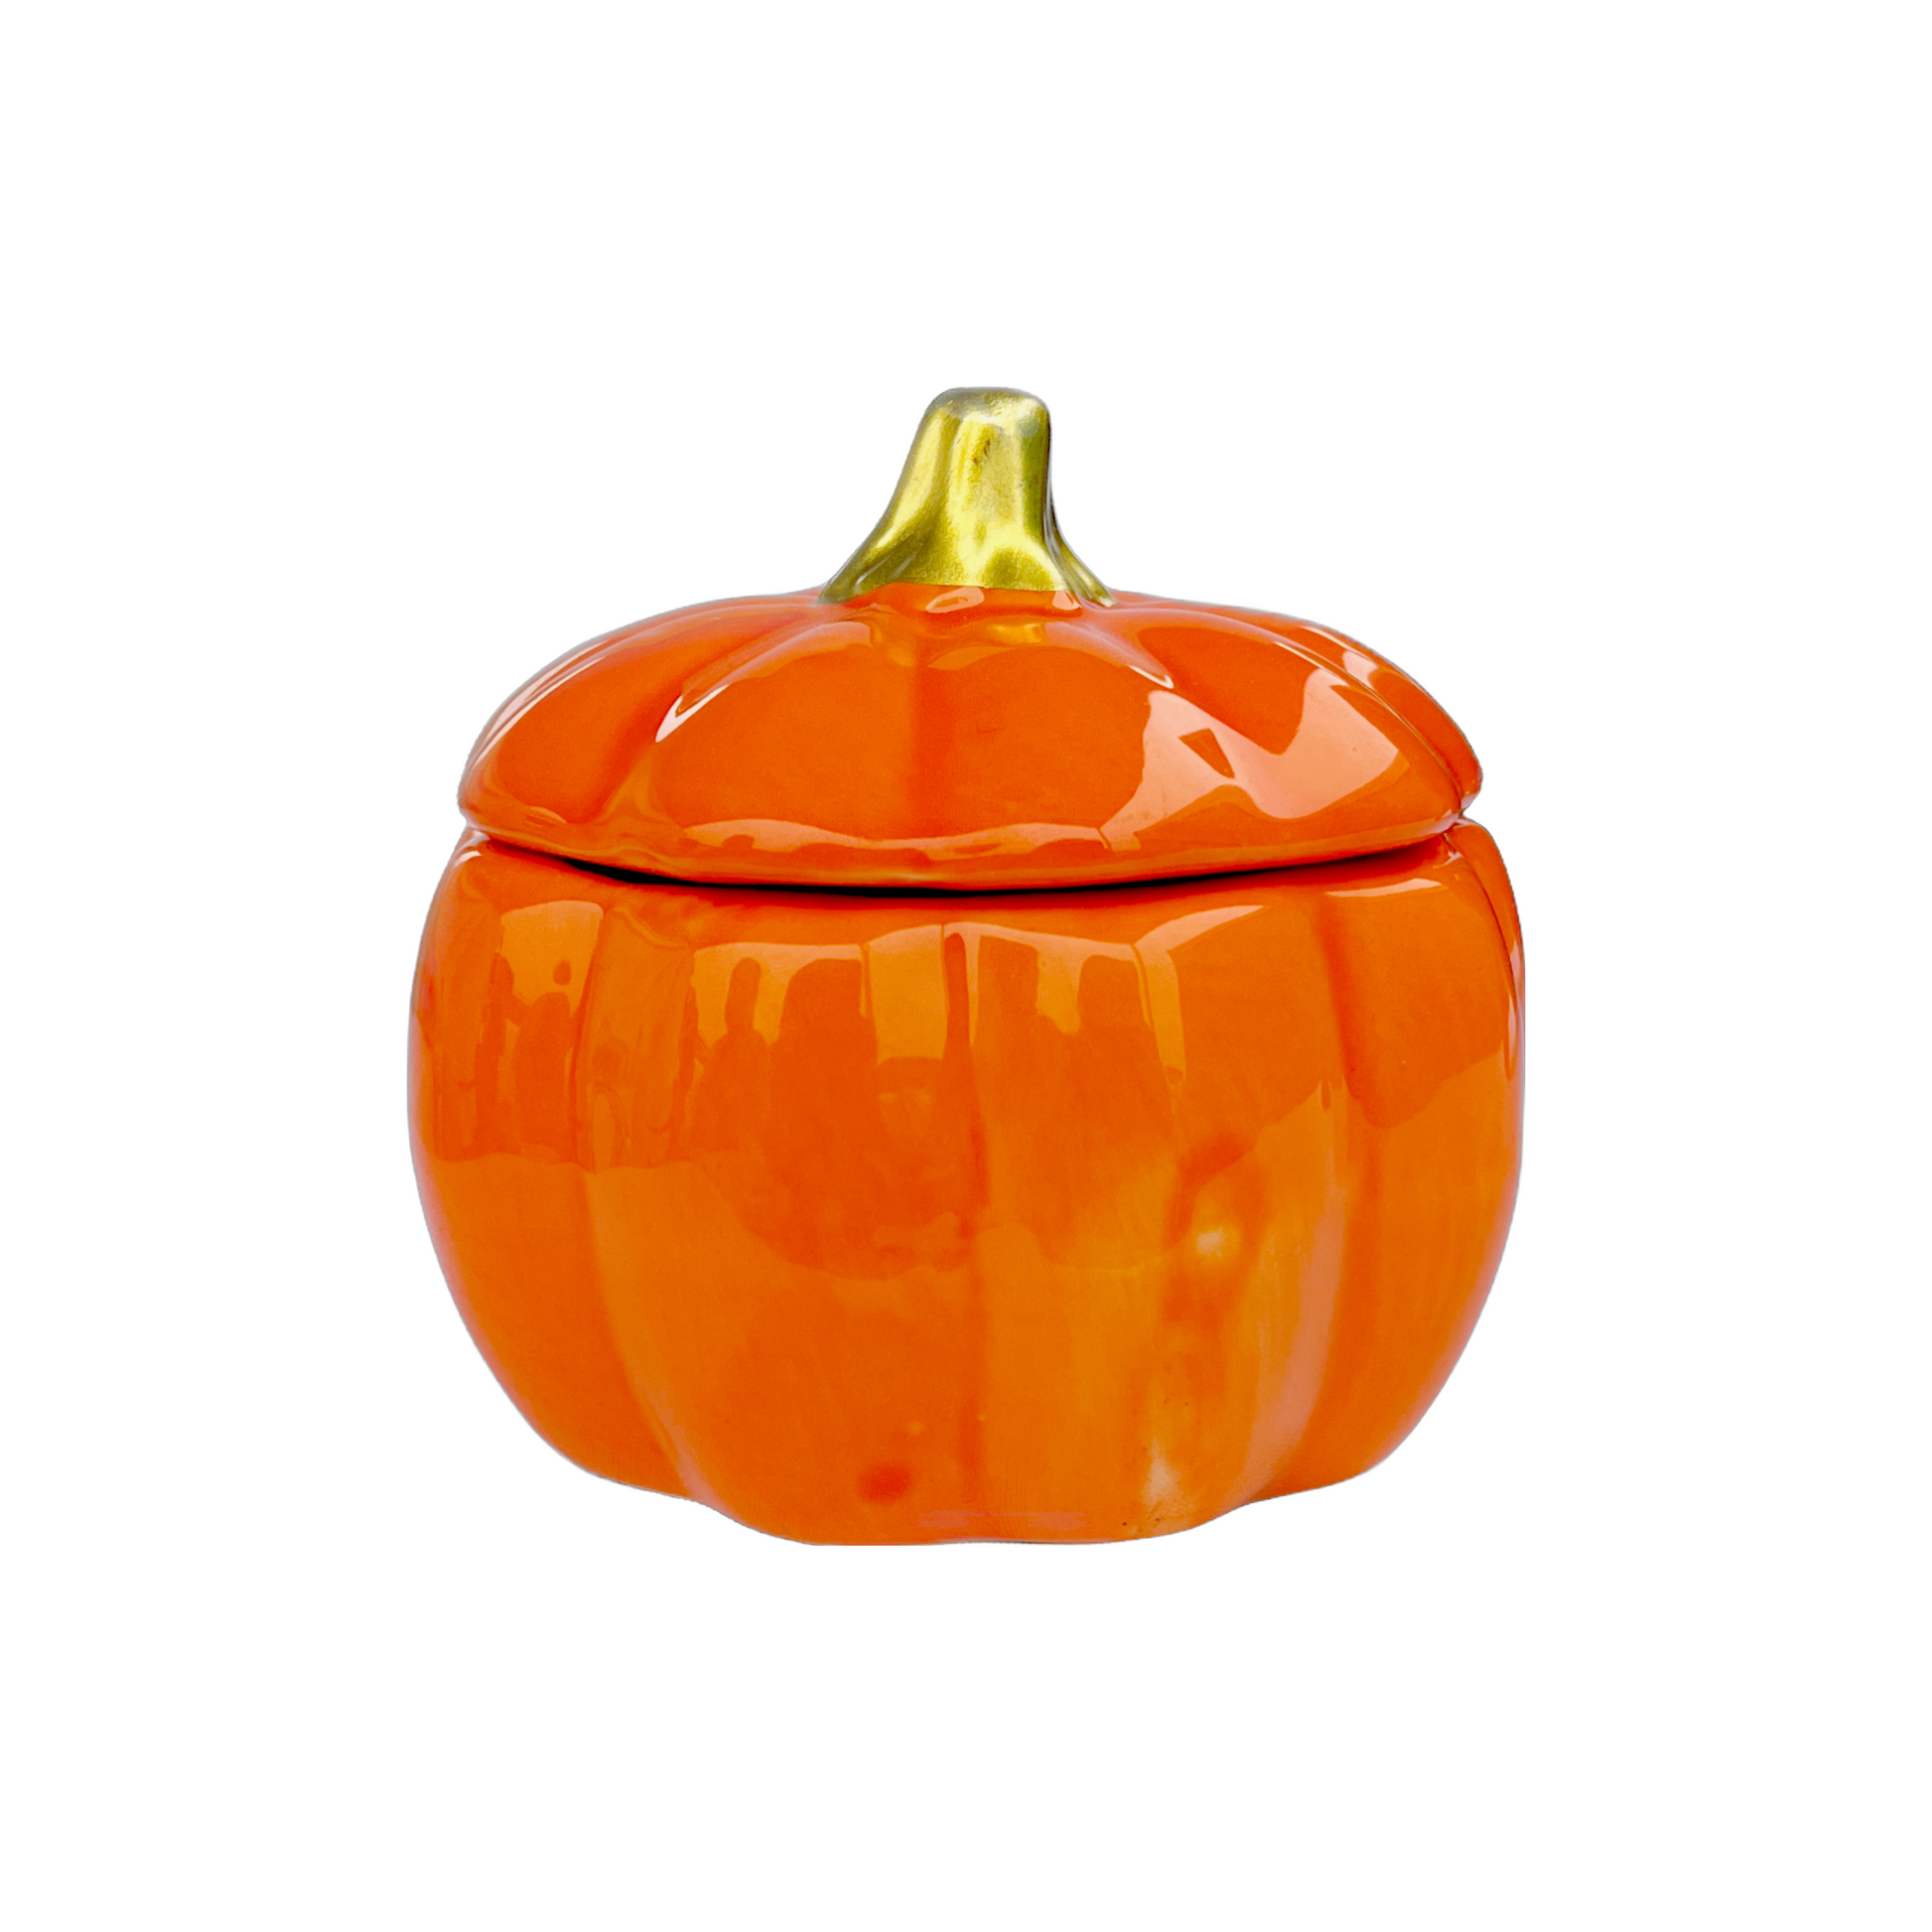 Pumpkin Candles - Premium  from Raynham Candle Company  - Just $15! Shop now at Raynham Candle Company 